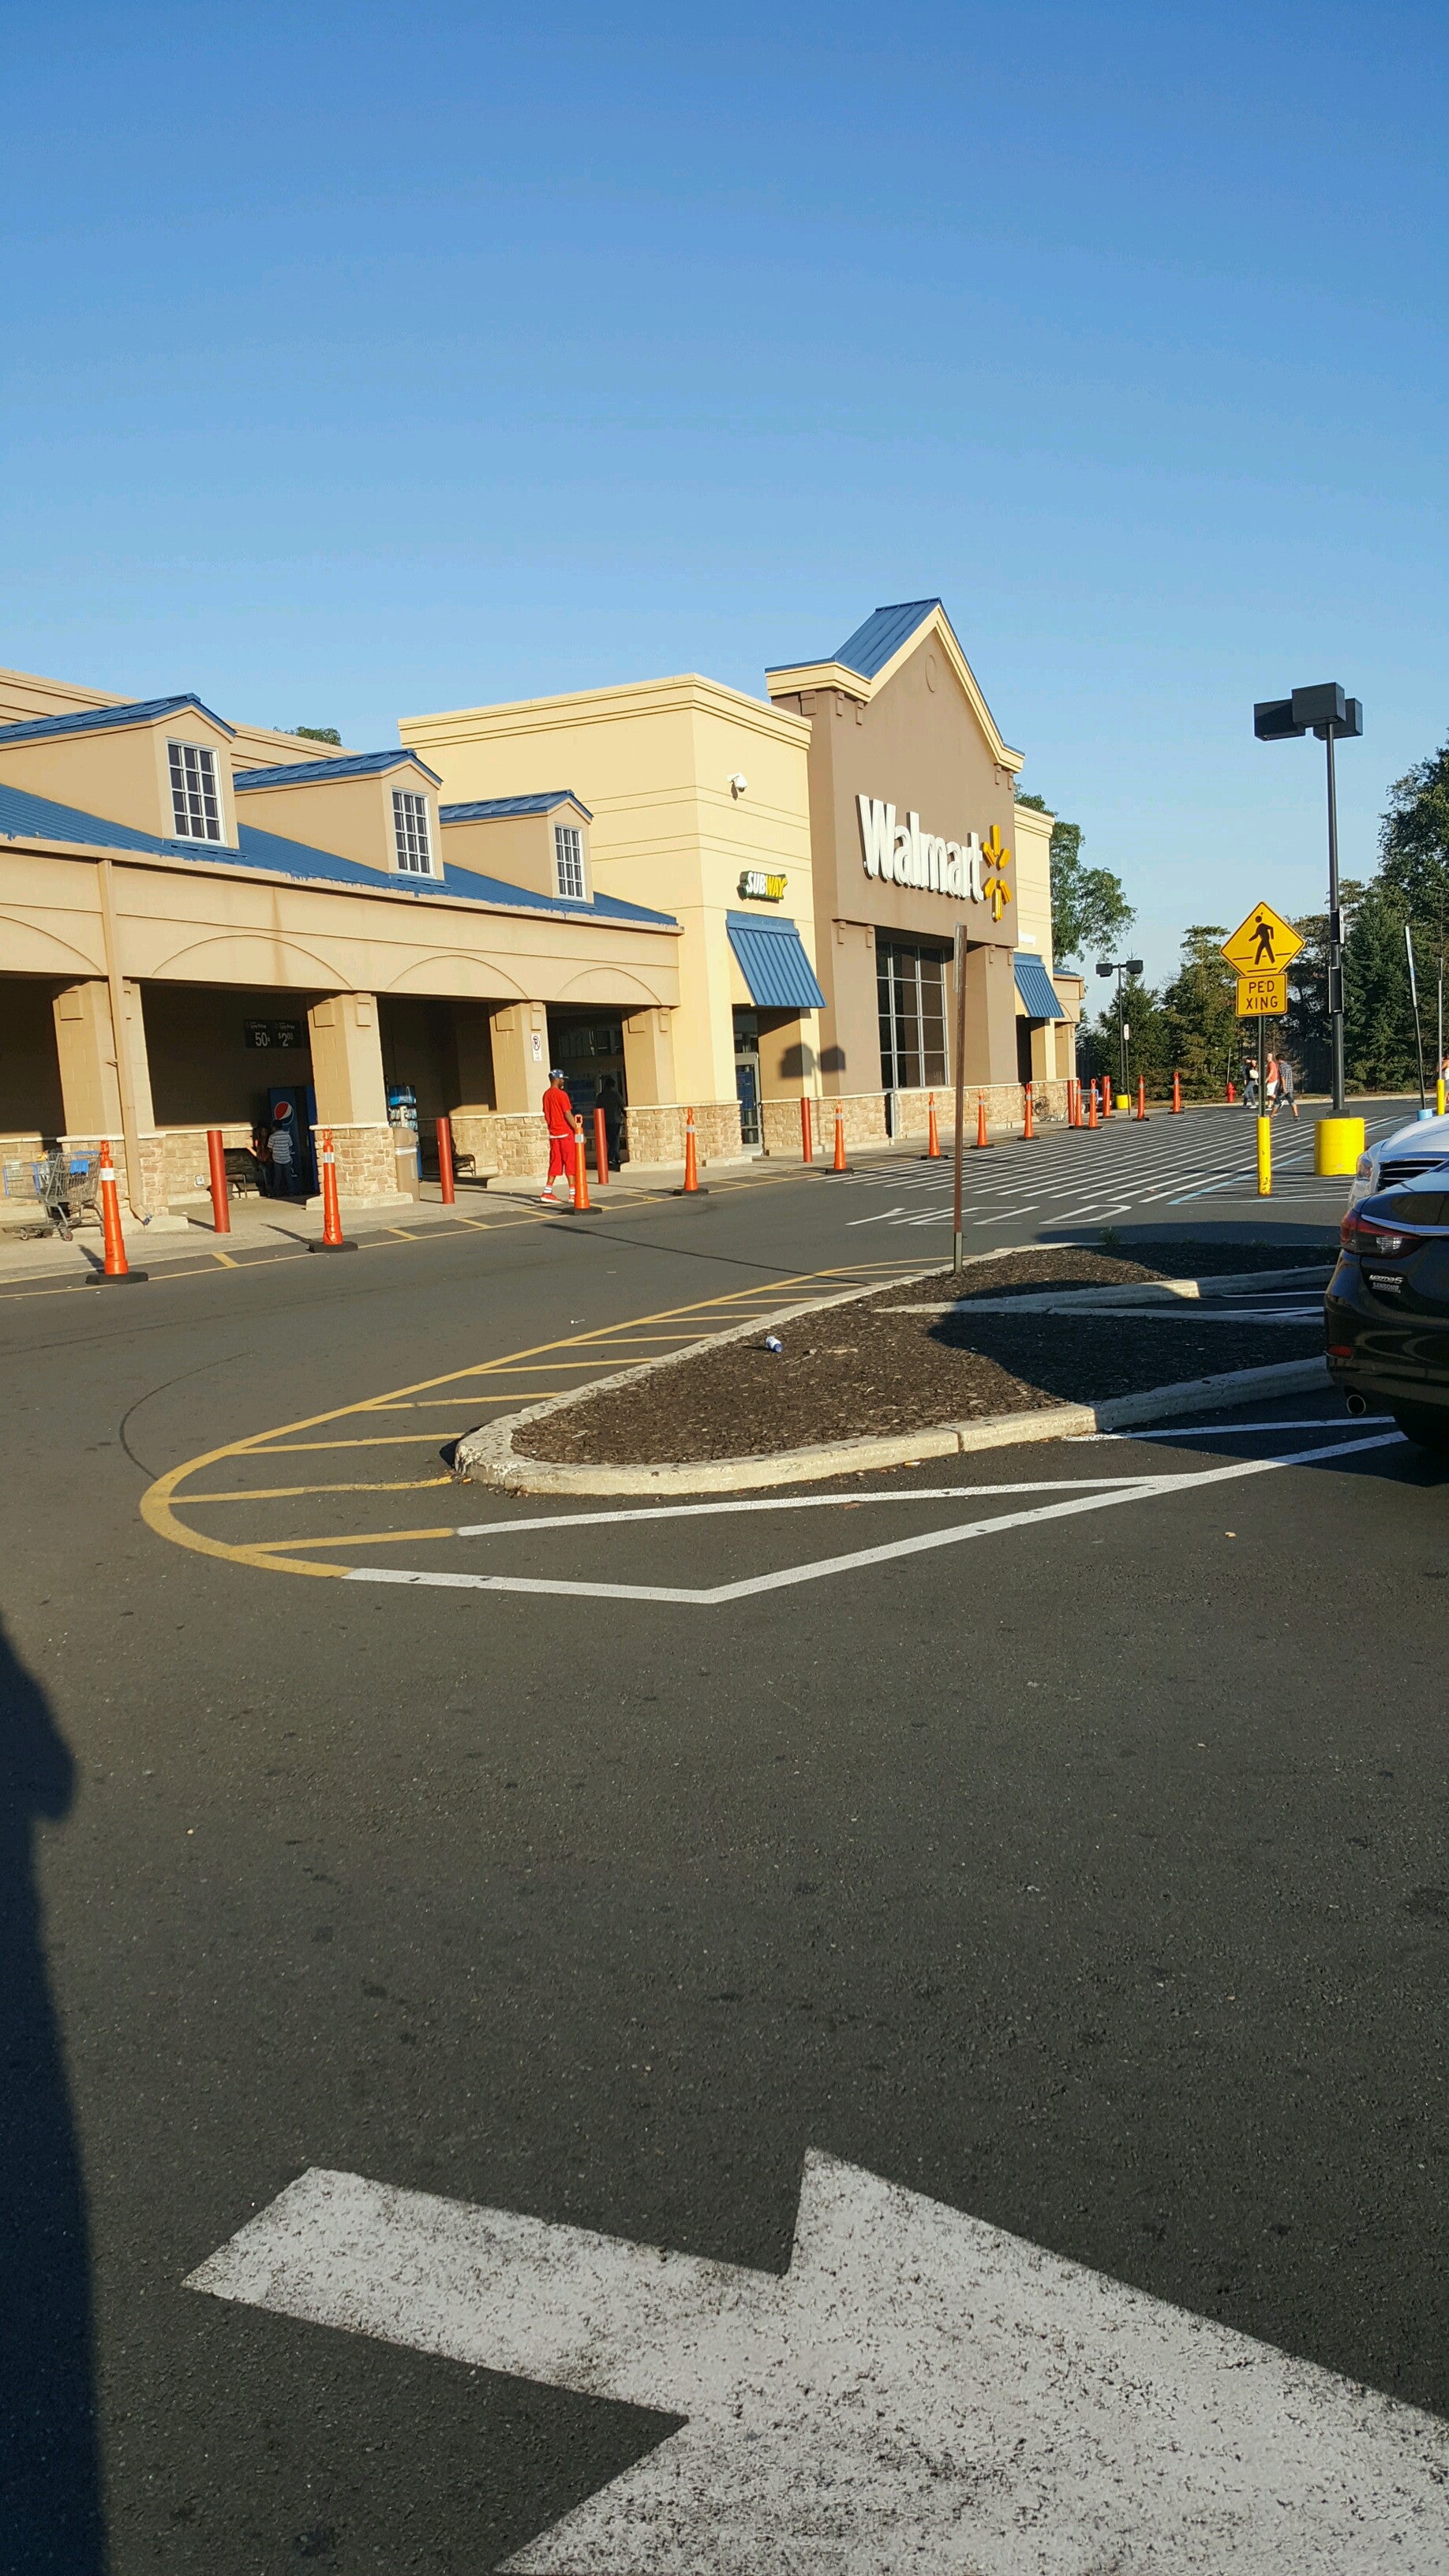 Walmart Supercenter, 950 Route 37 W, Toms River, NJ, Pharmacies - MapQuest